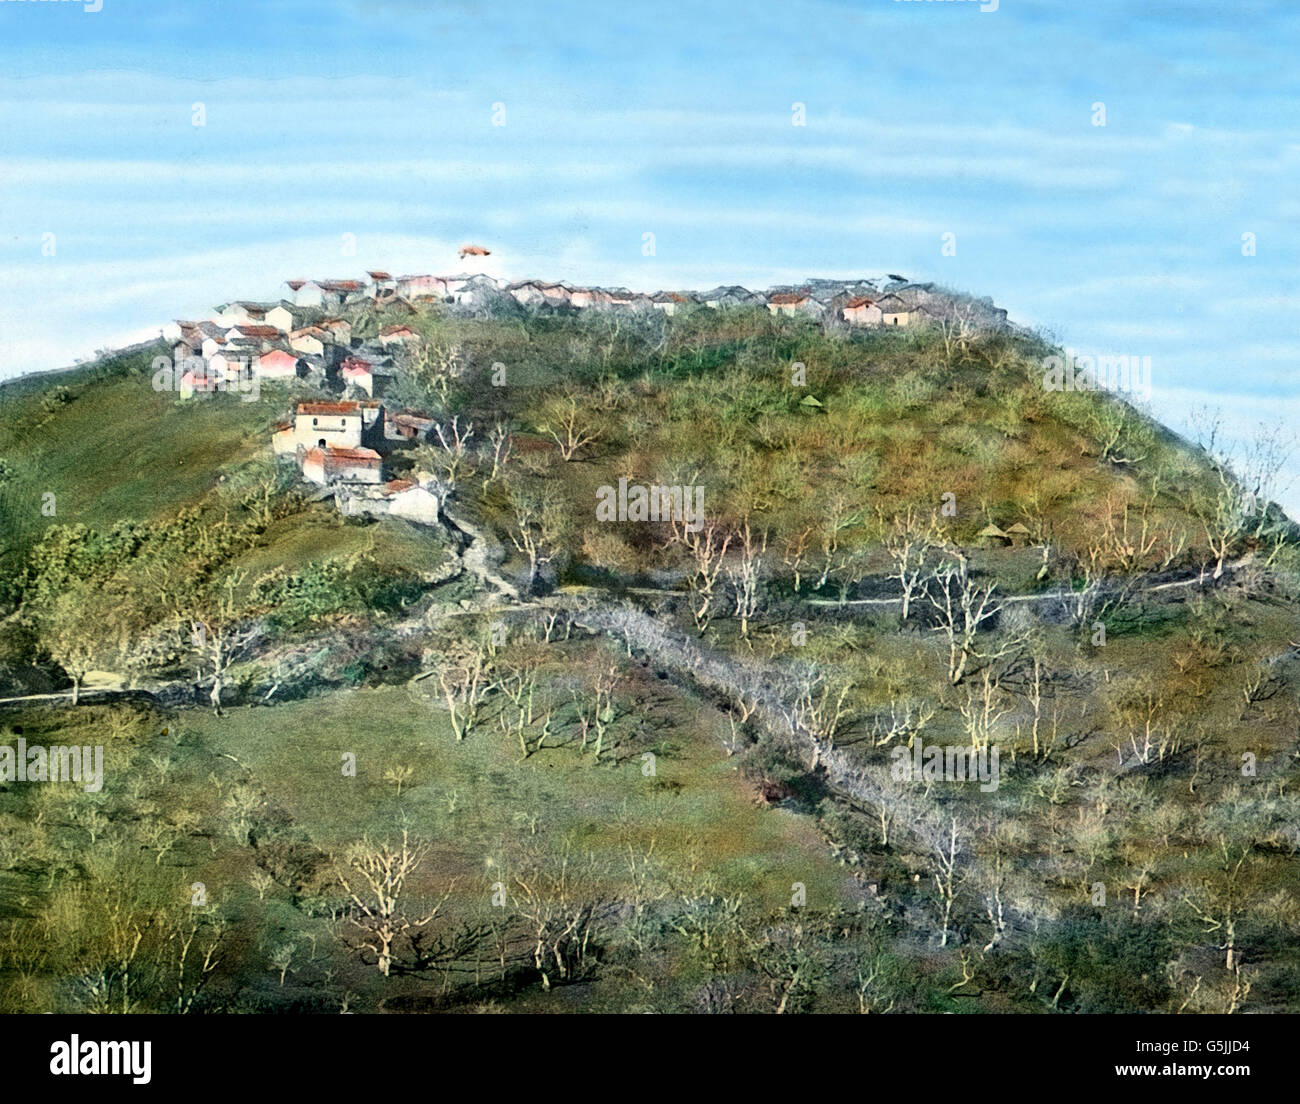 Ein kleines Bergdorf der Kabylen in der Provinz Tizi Ouzou in Algerien, ca. 1920er Jahre. A small mountain village of the Kabyle people at the Tizi Ouzou province in Algeria, ca. 1920s. Stock Photo